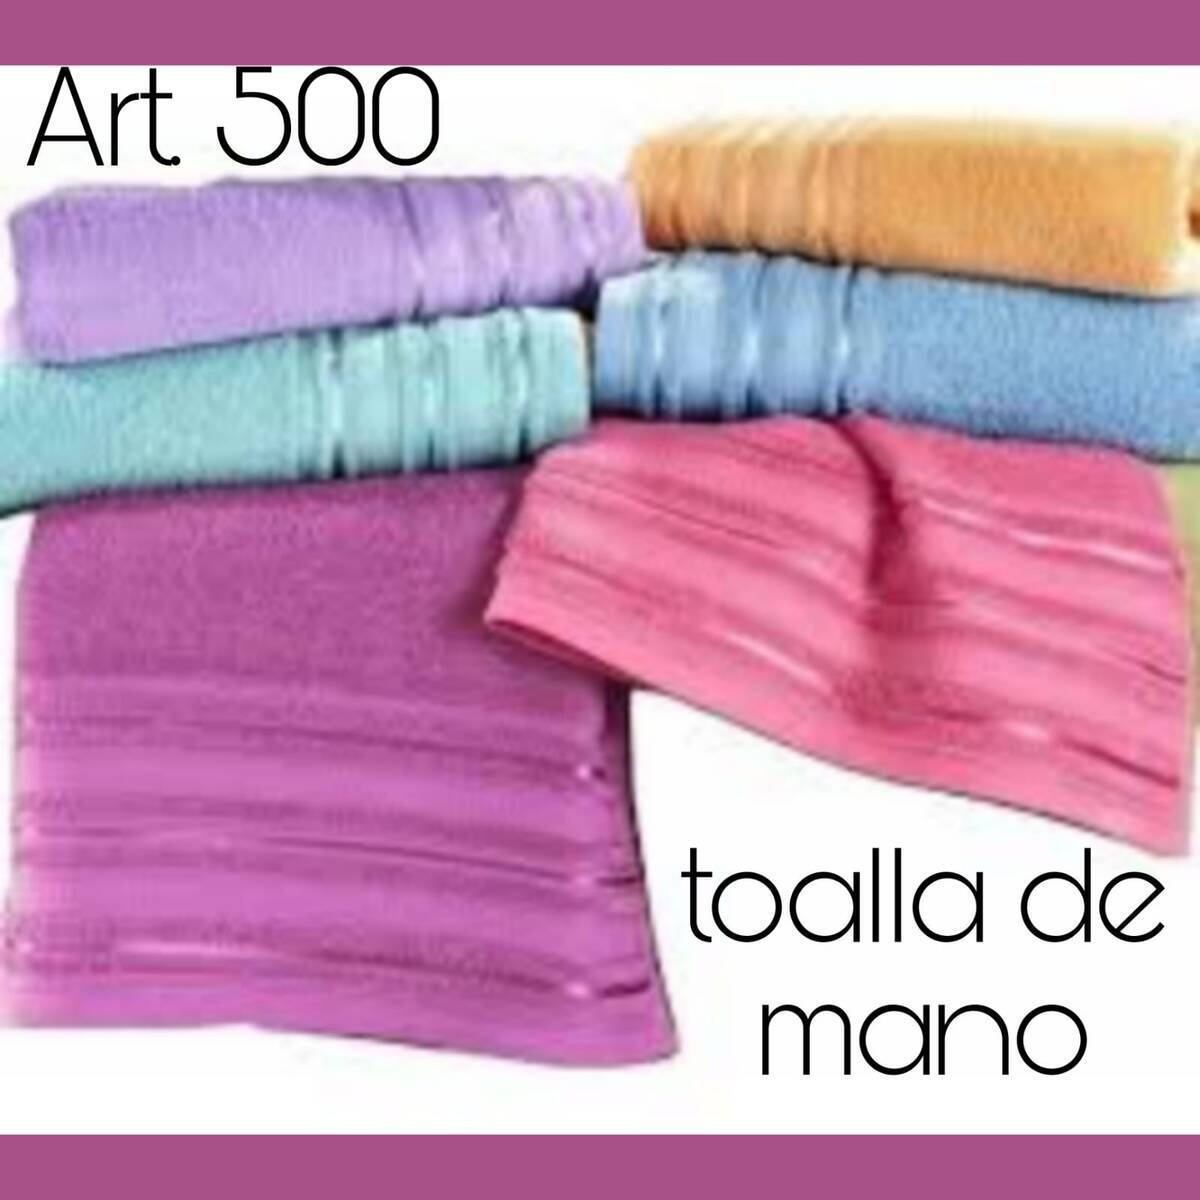 Imagen producto Toalla De Mano Fantasia Art 500 0